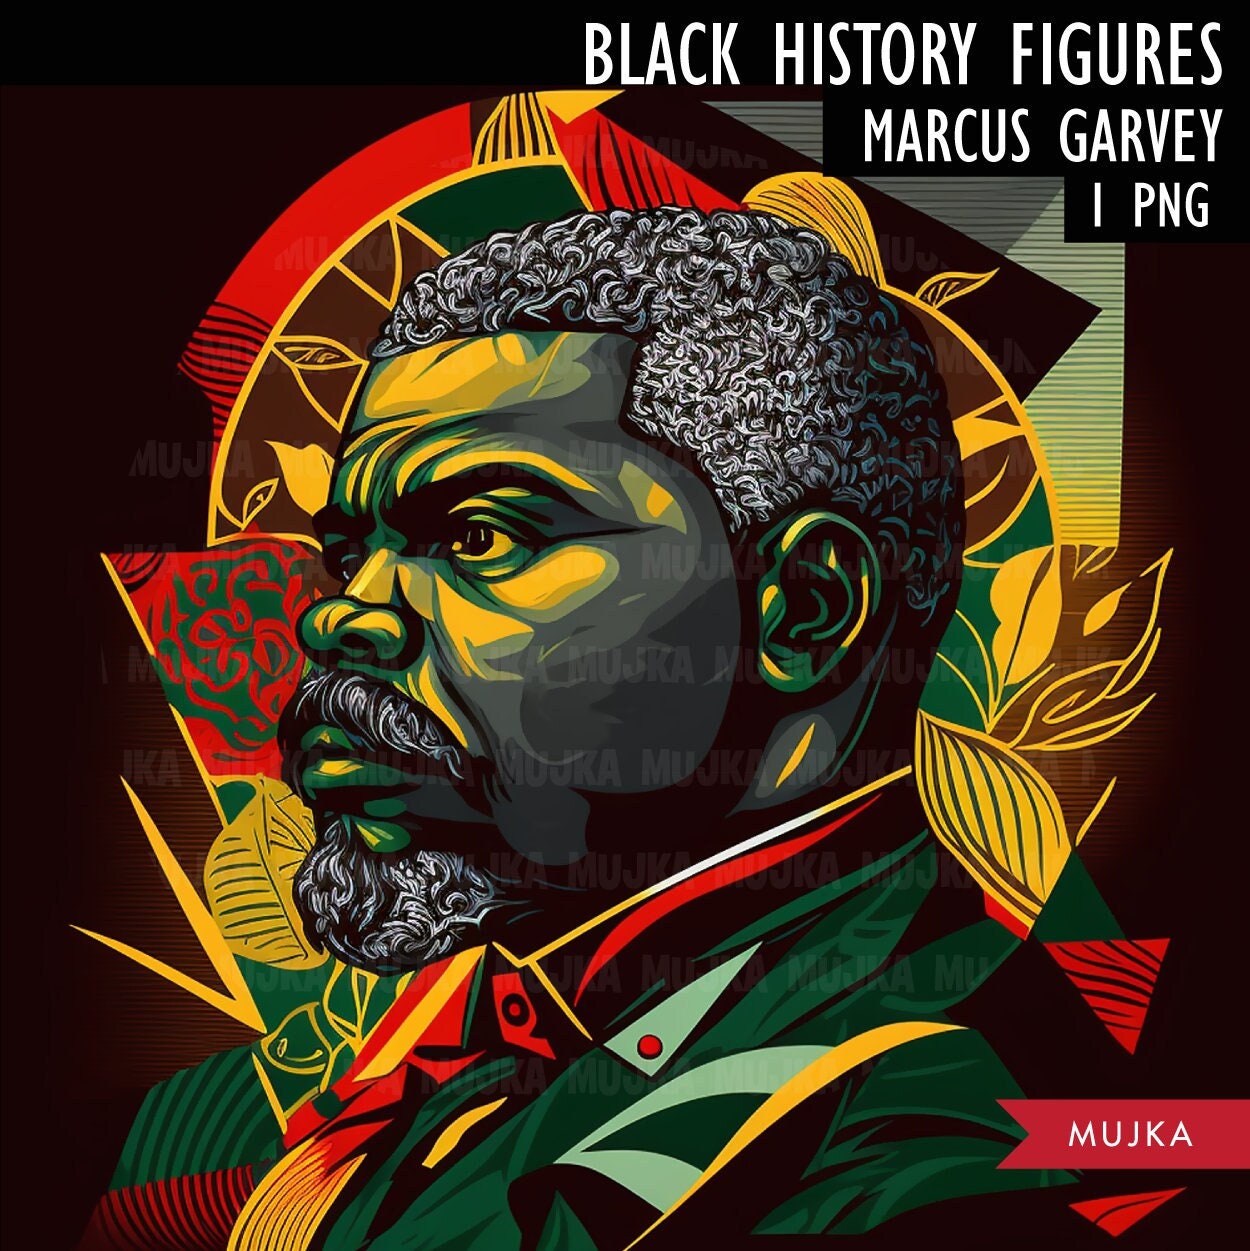 Black History PNG, Marcus Garvey poster, Black History Cards, printable Black History Art, Black History wall art, sublimation design